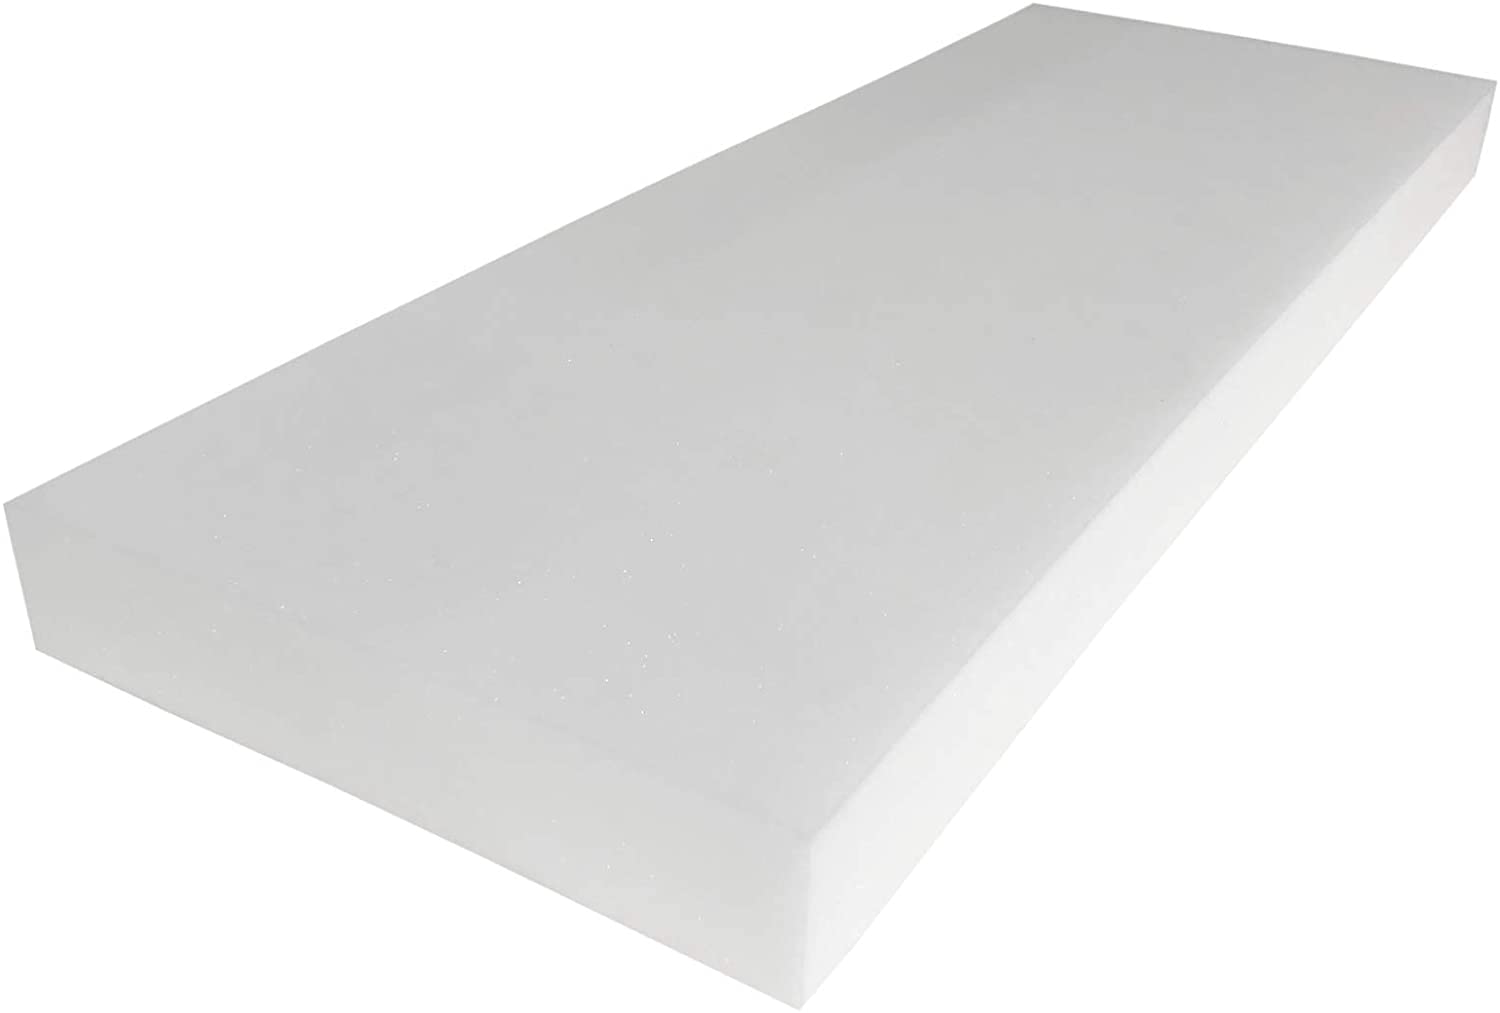 Foamma 4 x 30 x 72 High Density Upholstery Foam Cushion (Seat  Replacement, Upholstery Sheet, Foam Padding) Made in USA! 4 x 30 x 72  High Density Foam